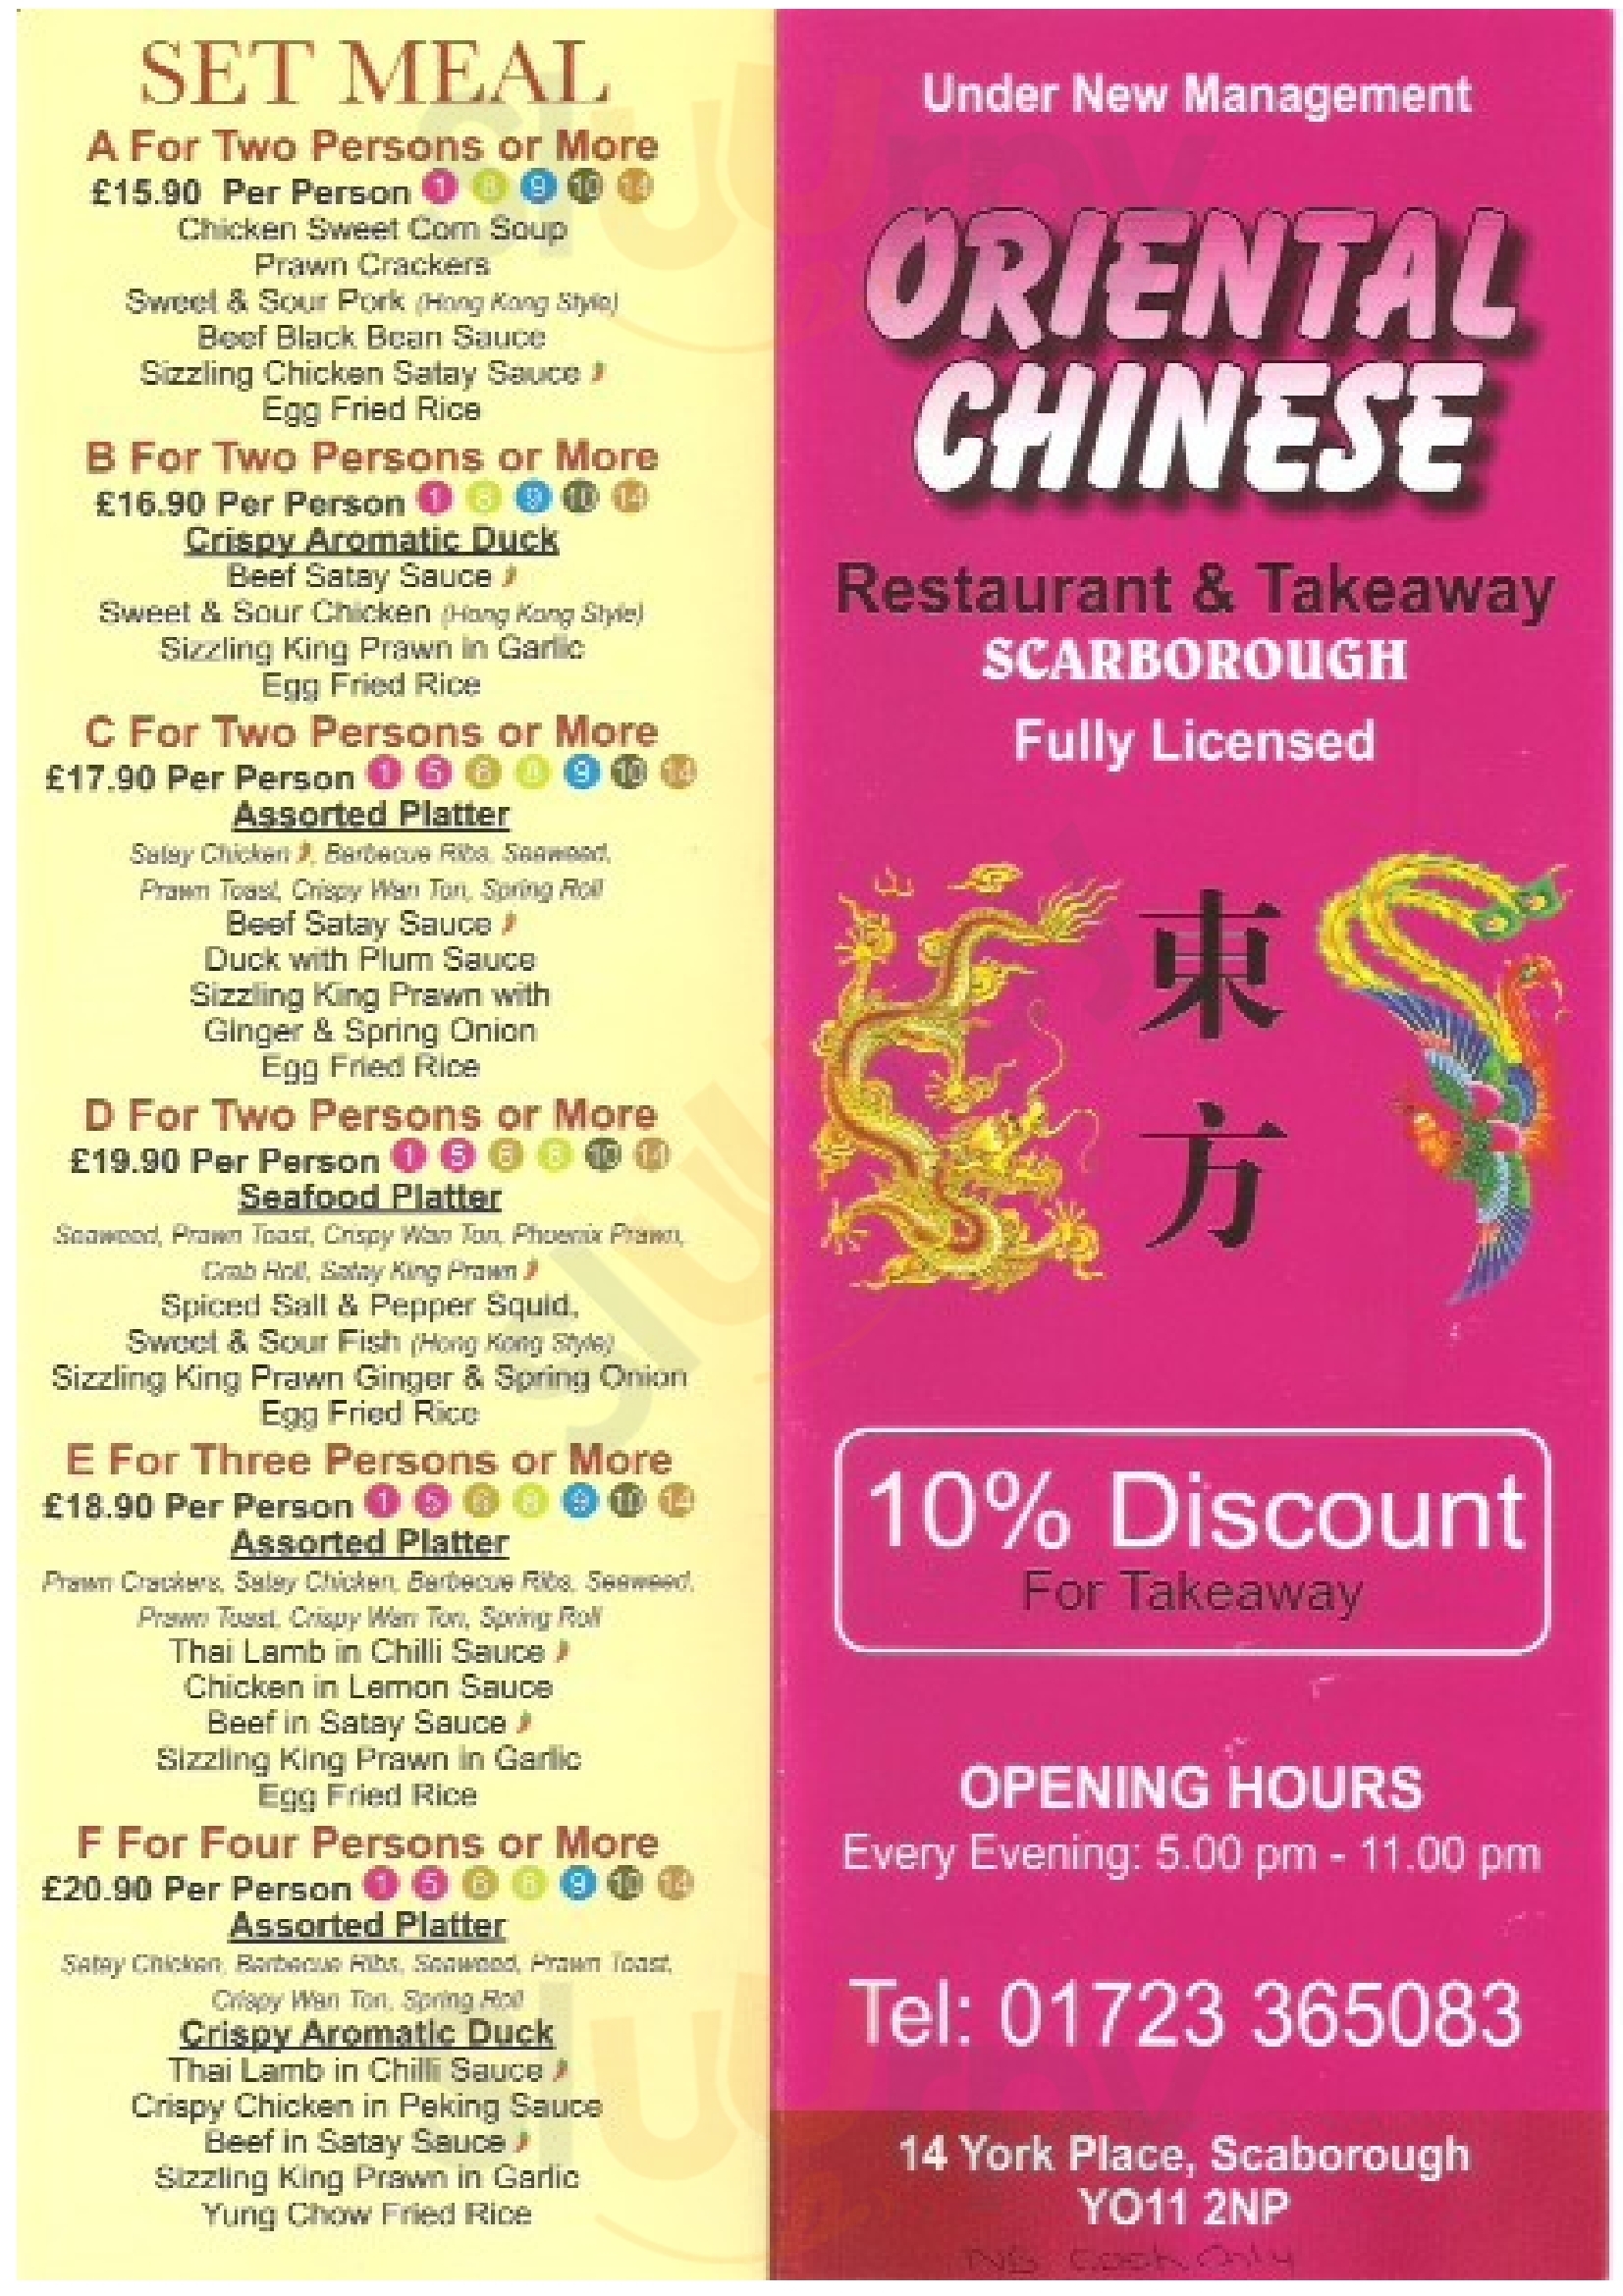 Oriental Chinese Restaurant Scarborough Menu - 1